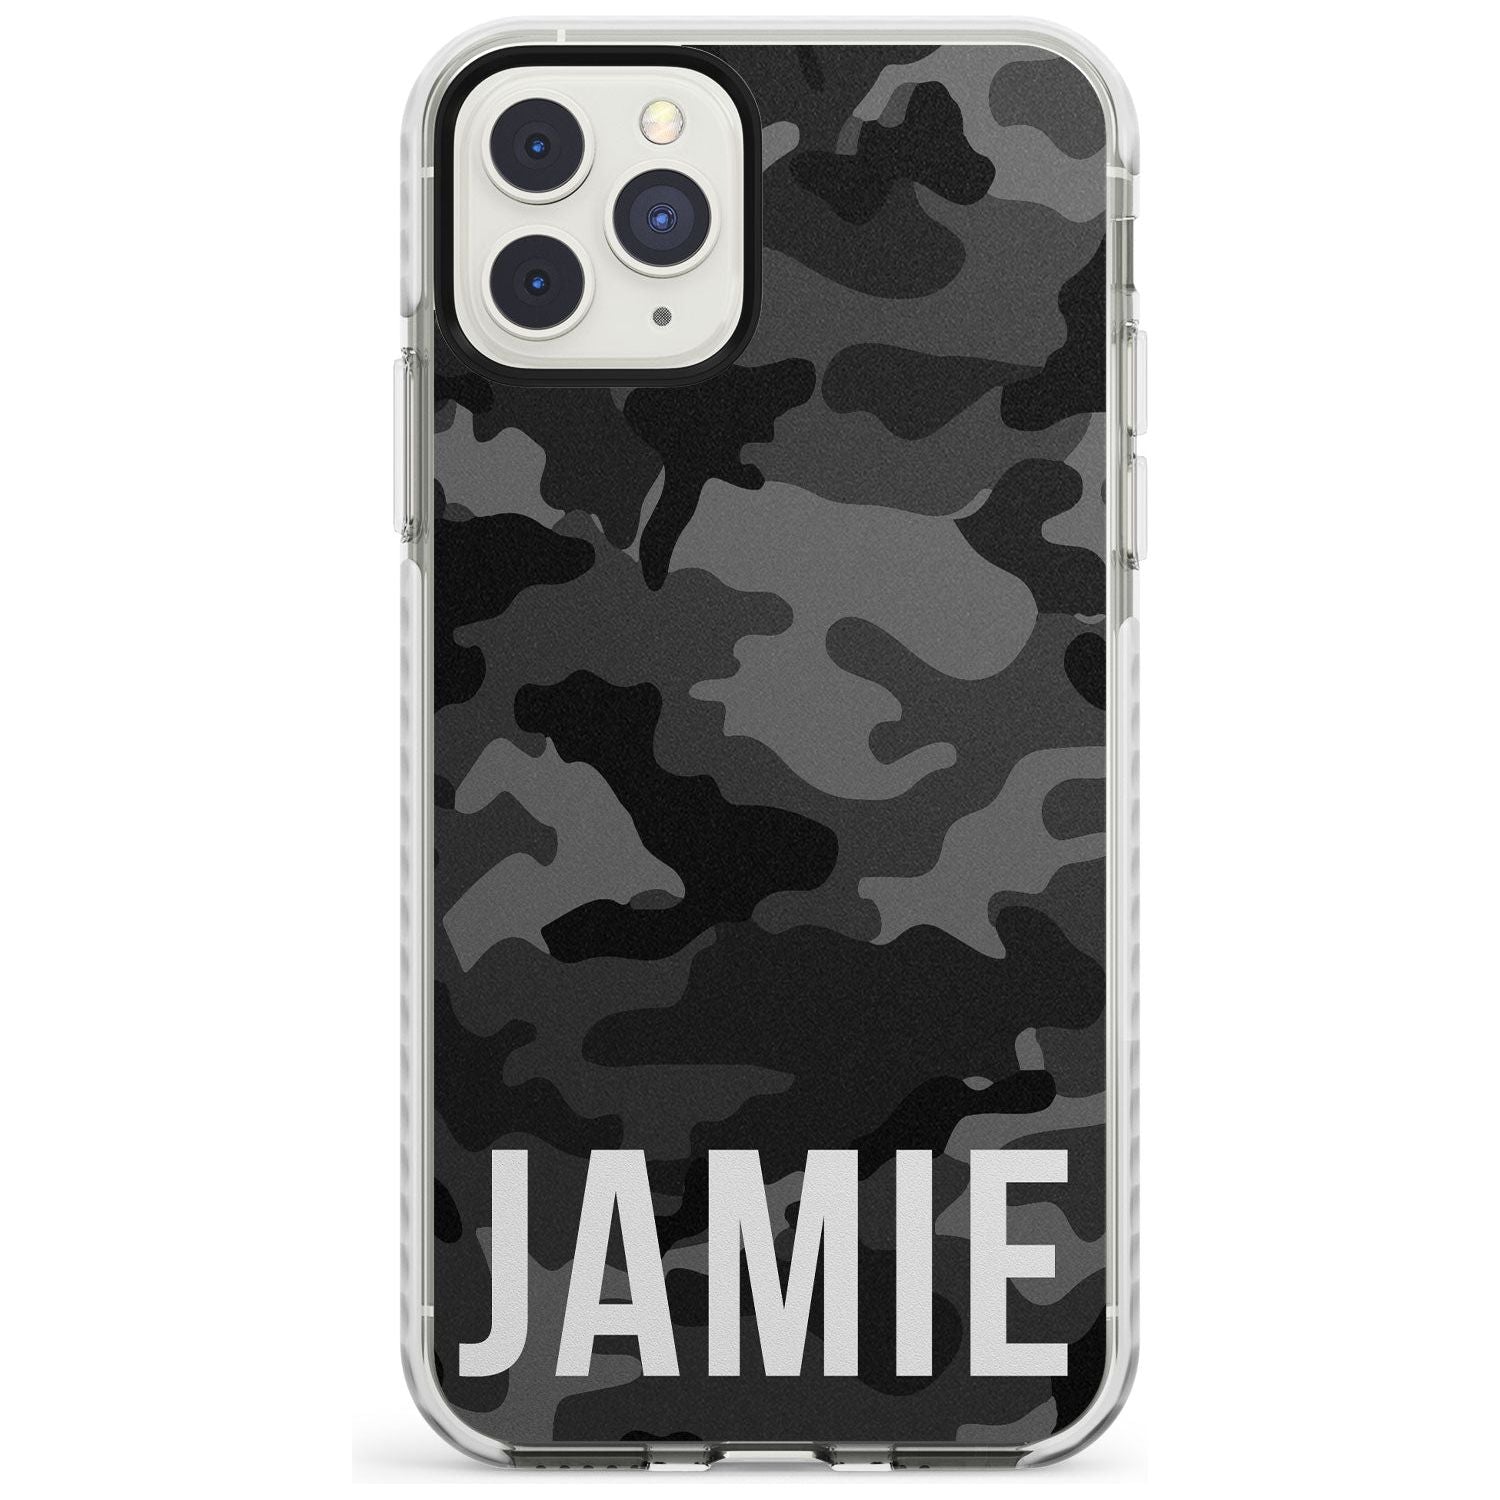 Horizontal Name Personalised Black Camouflage Impact Phone Case for iPhone 11 Pro Max